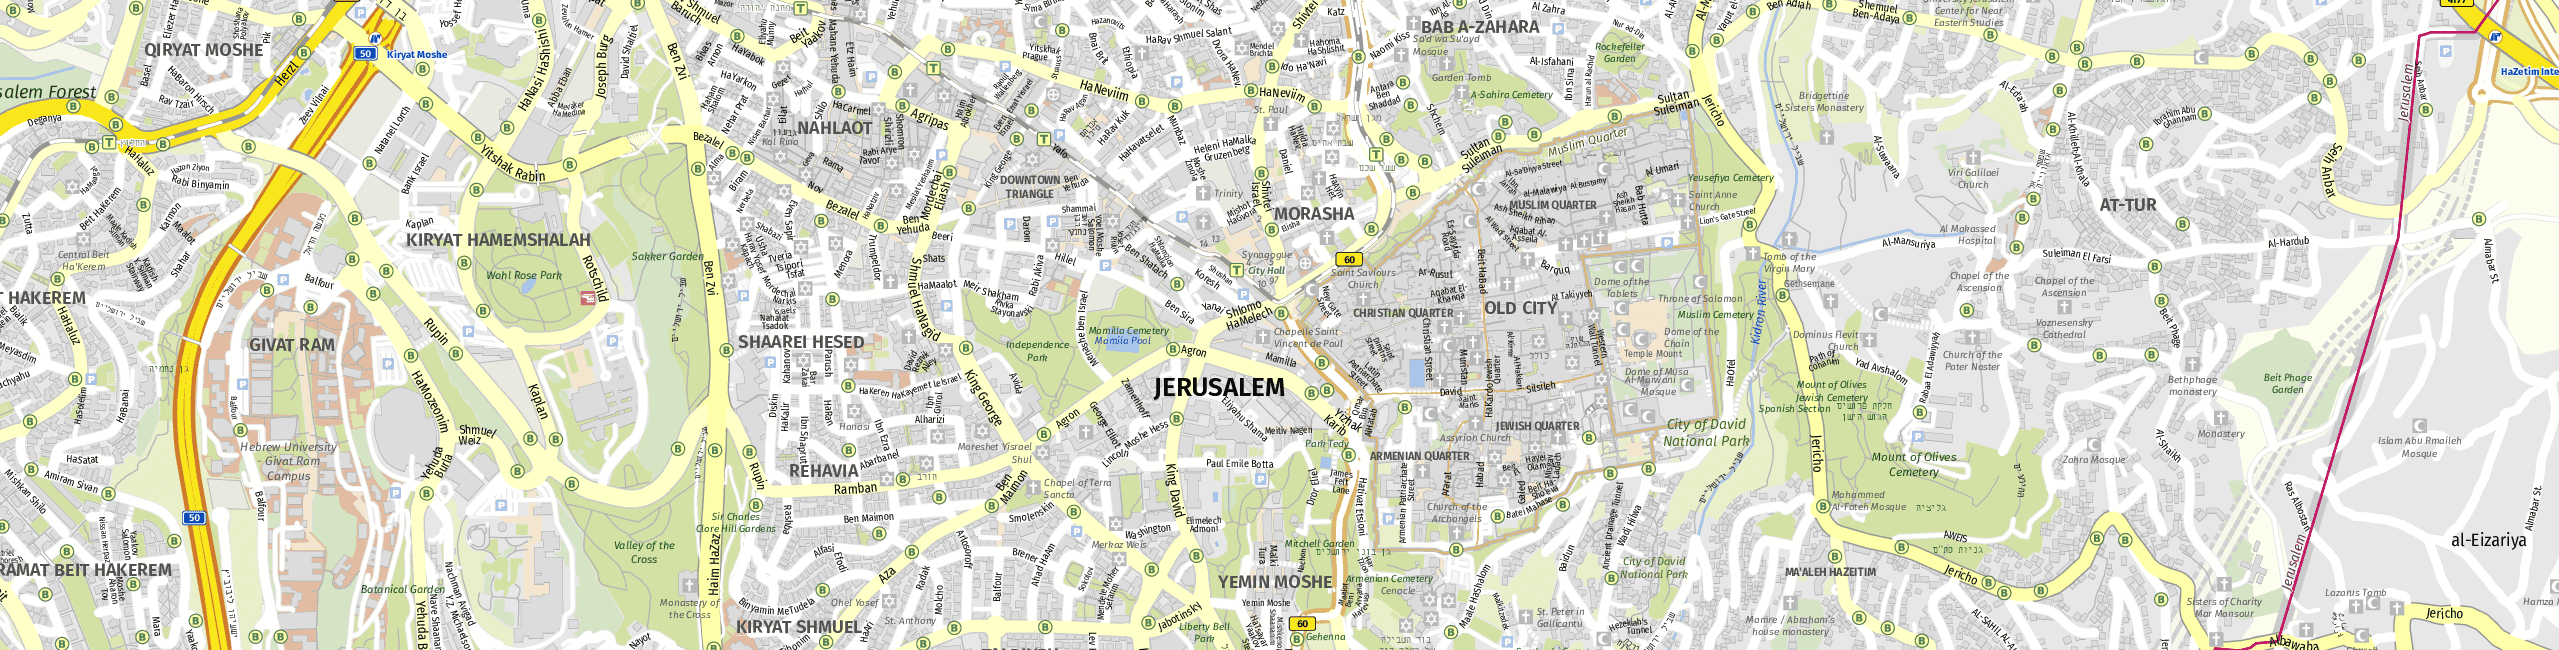 Stadtplan Jerusalem zum Downloaden.